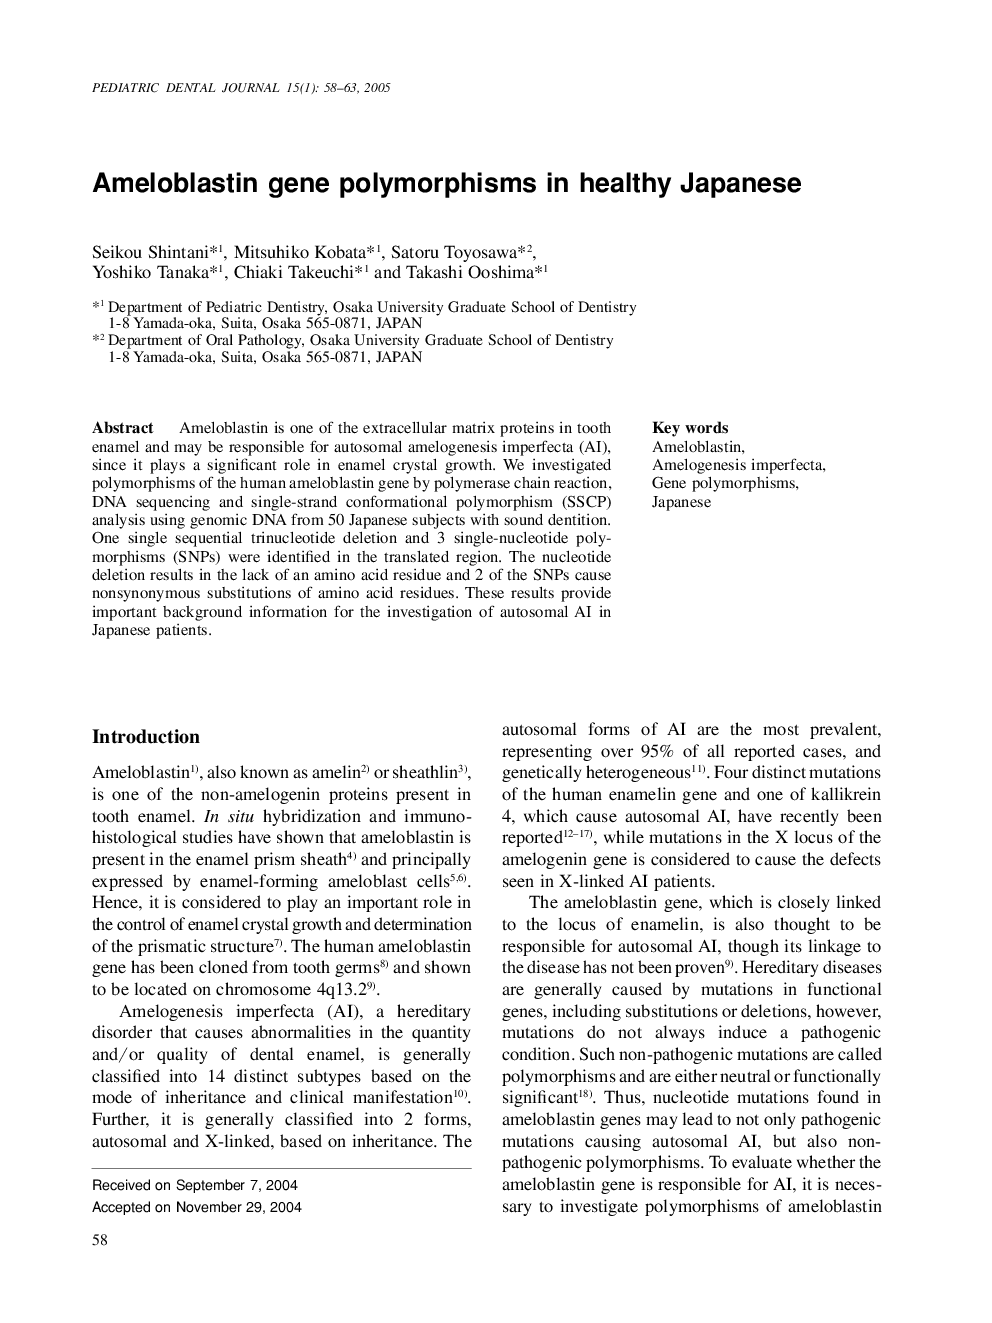 Ameloblastin gene polymorphisms in healthy Japanese